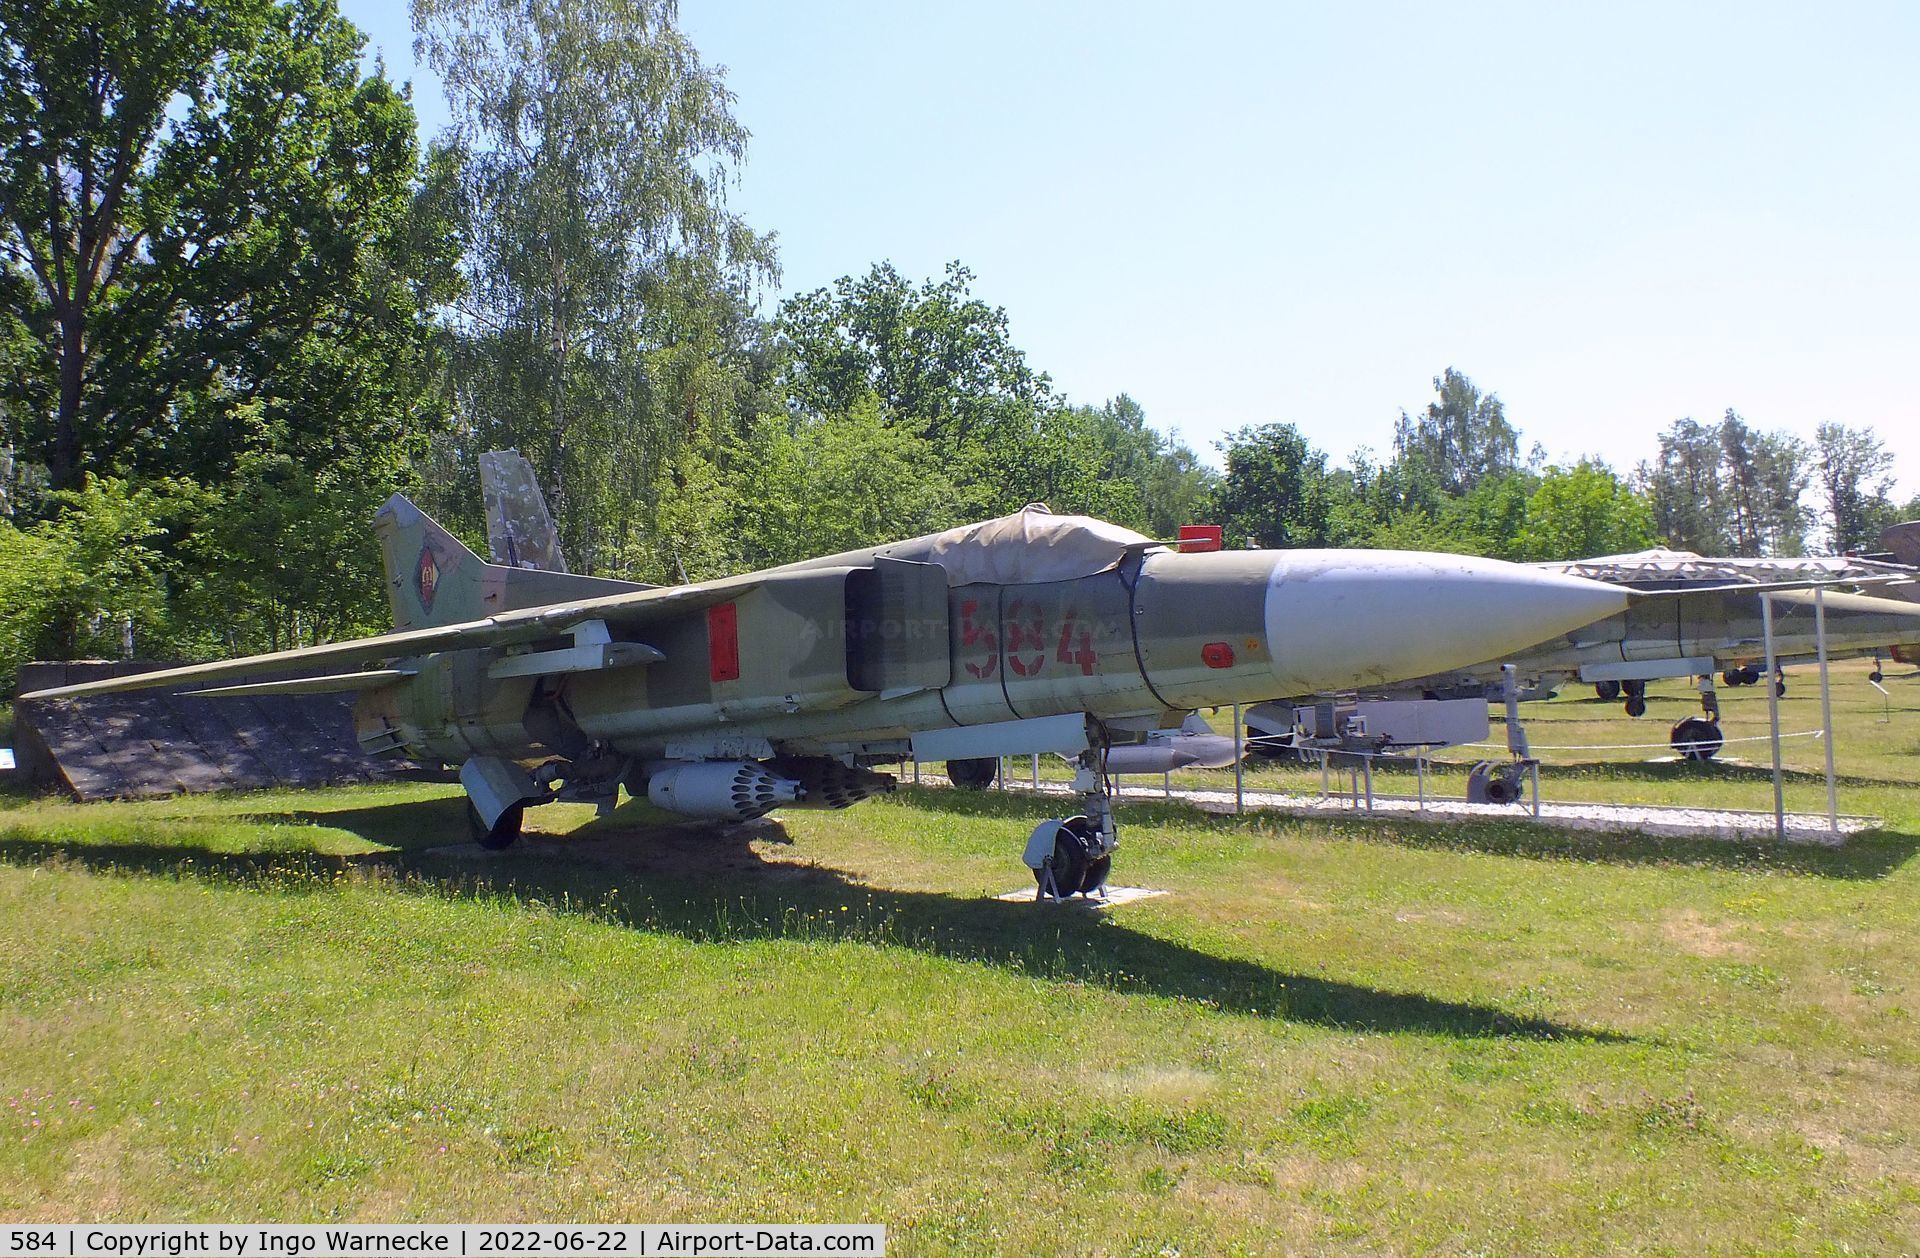 584, 1978 Mikoyan-Gurevich MiG-23MF C/N 03902 13098, Mikoyan i Gurevich MiG-23MF FLOGGER-B at the Flugplatzmuseum Cottbus (Cottbus airfield museum)